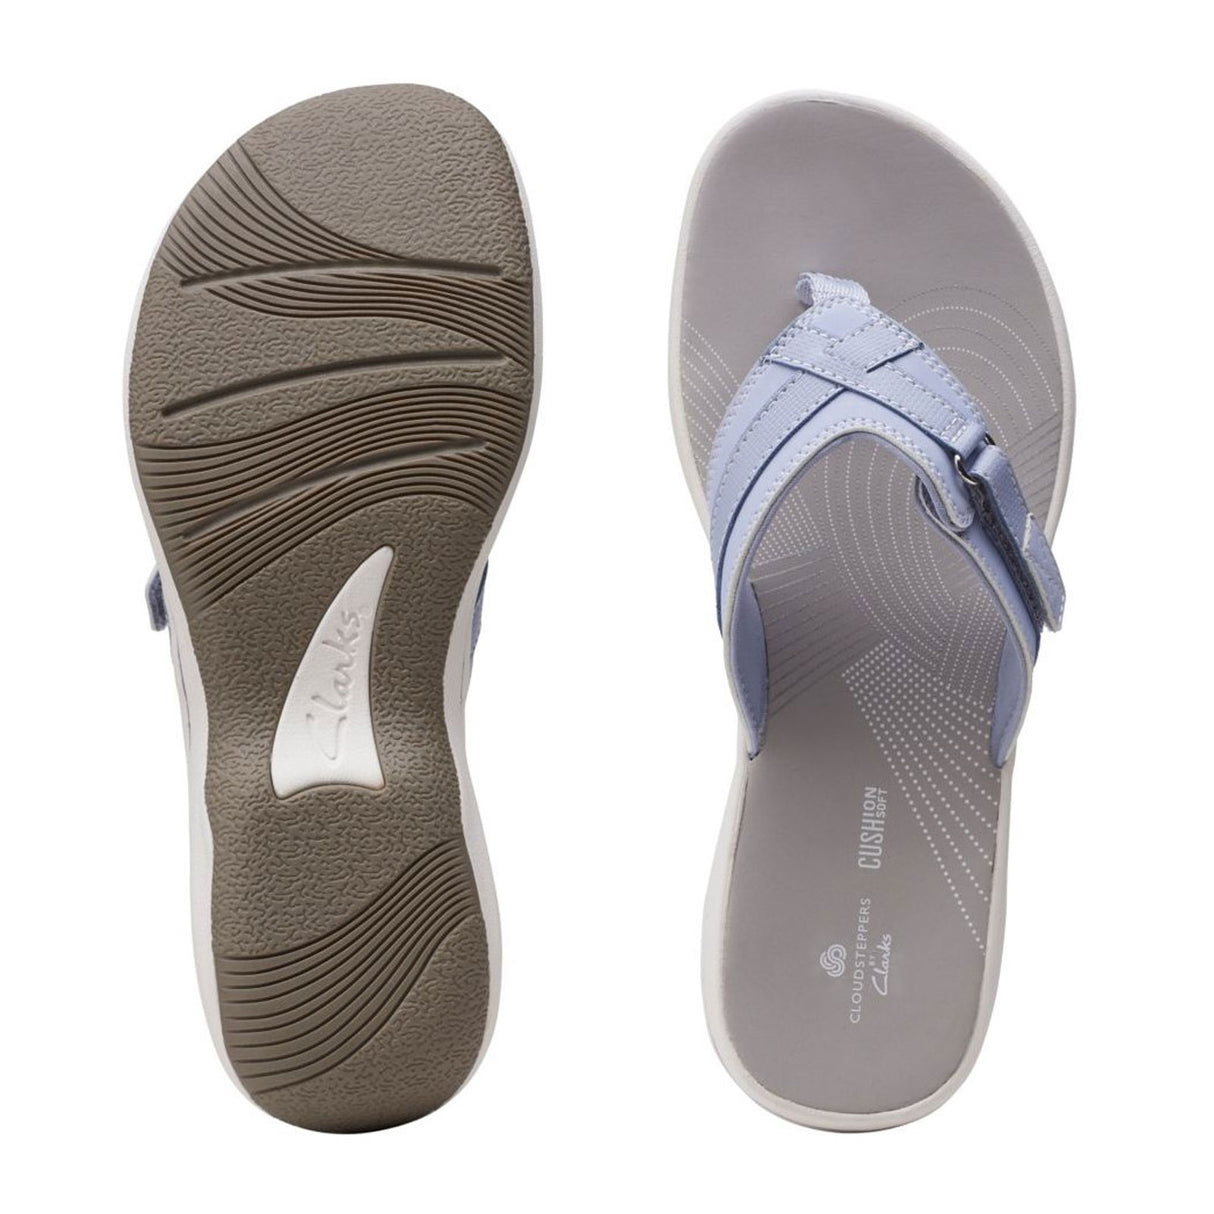 Clarks Breeze Sea Thong Sandal (Women) - Lavender Sandals - Thong - The Heel Shoe Fitters